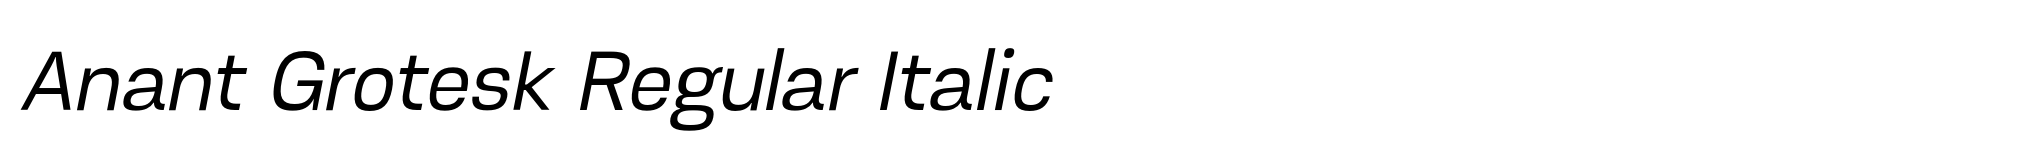 Anant Grotesk Regular Italic image